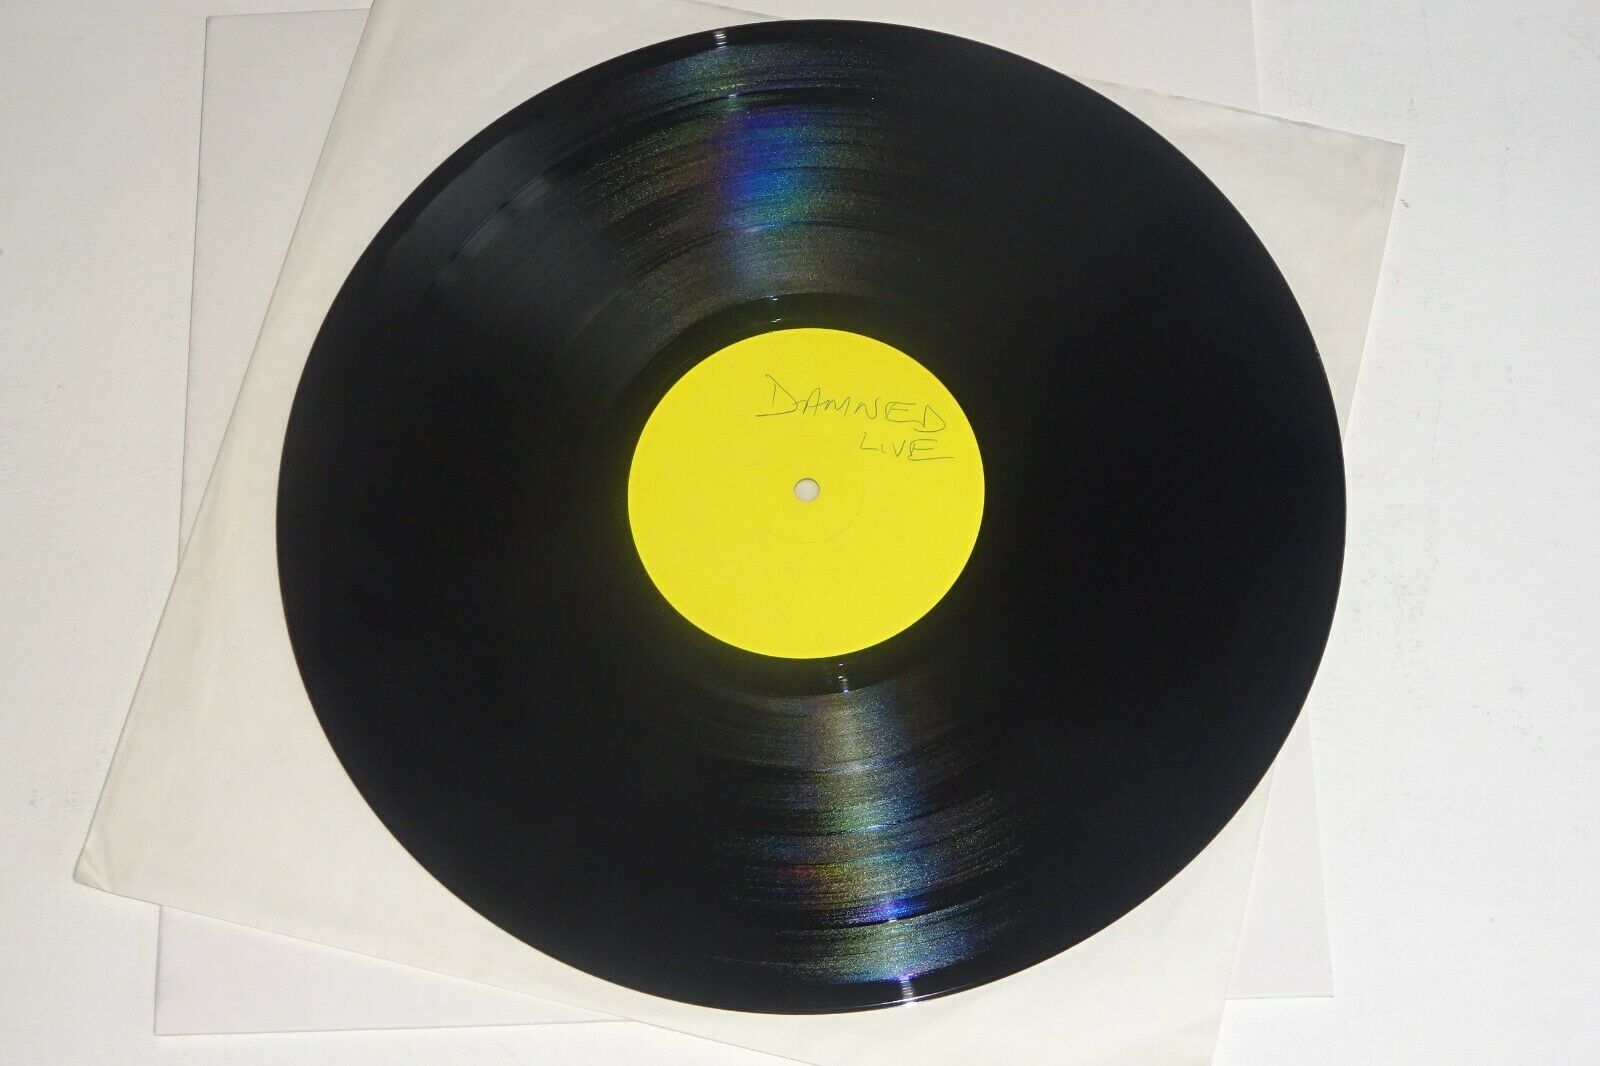 THE DAMNED BLACK ALBUM LIVE SIDE ONE SIDED 1980 TEST PRESSING CWK 3015 2 B 2U LP